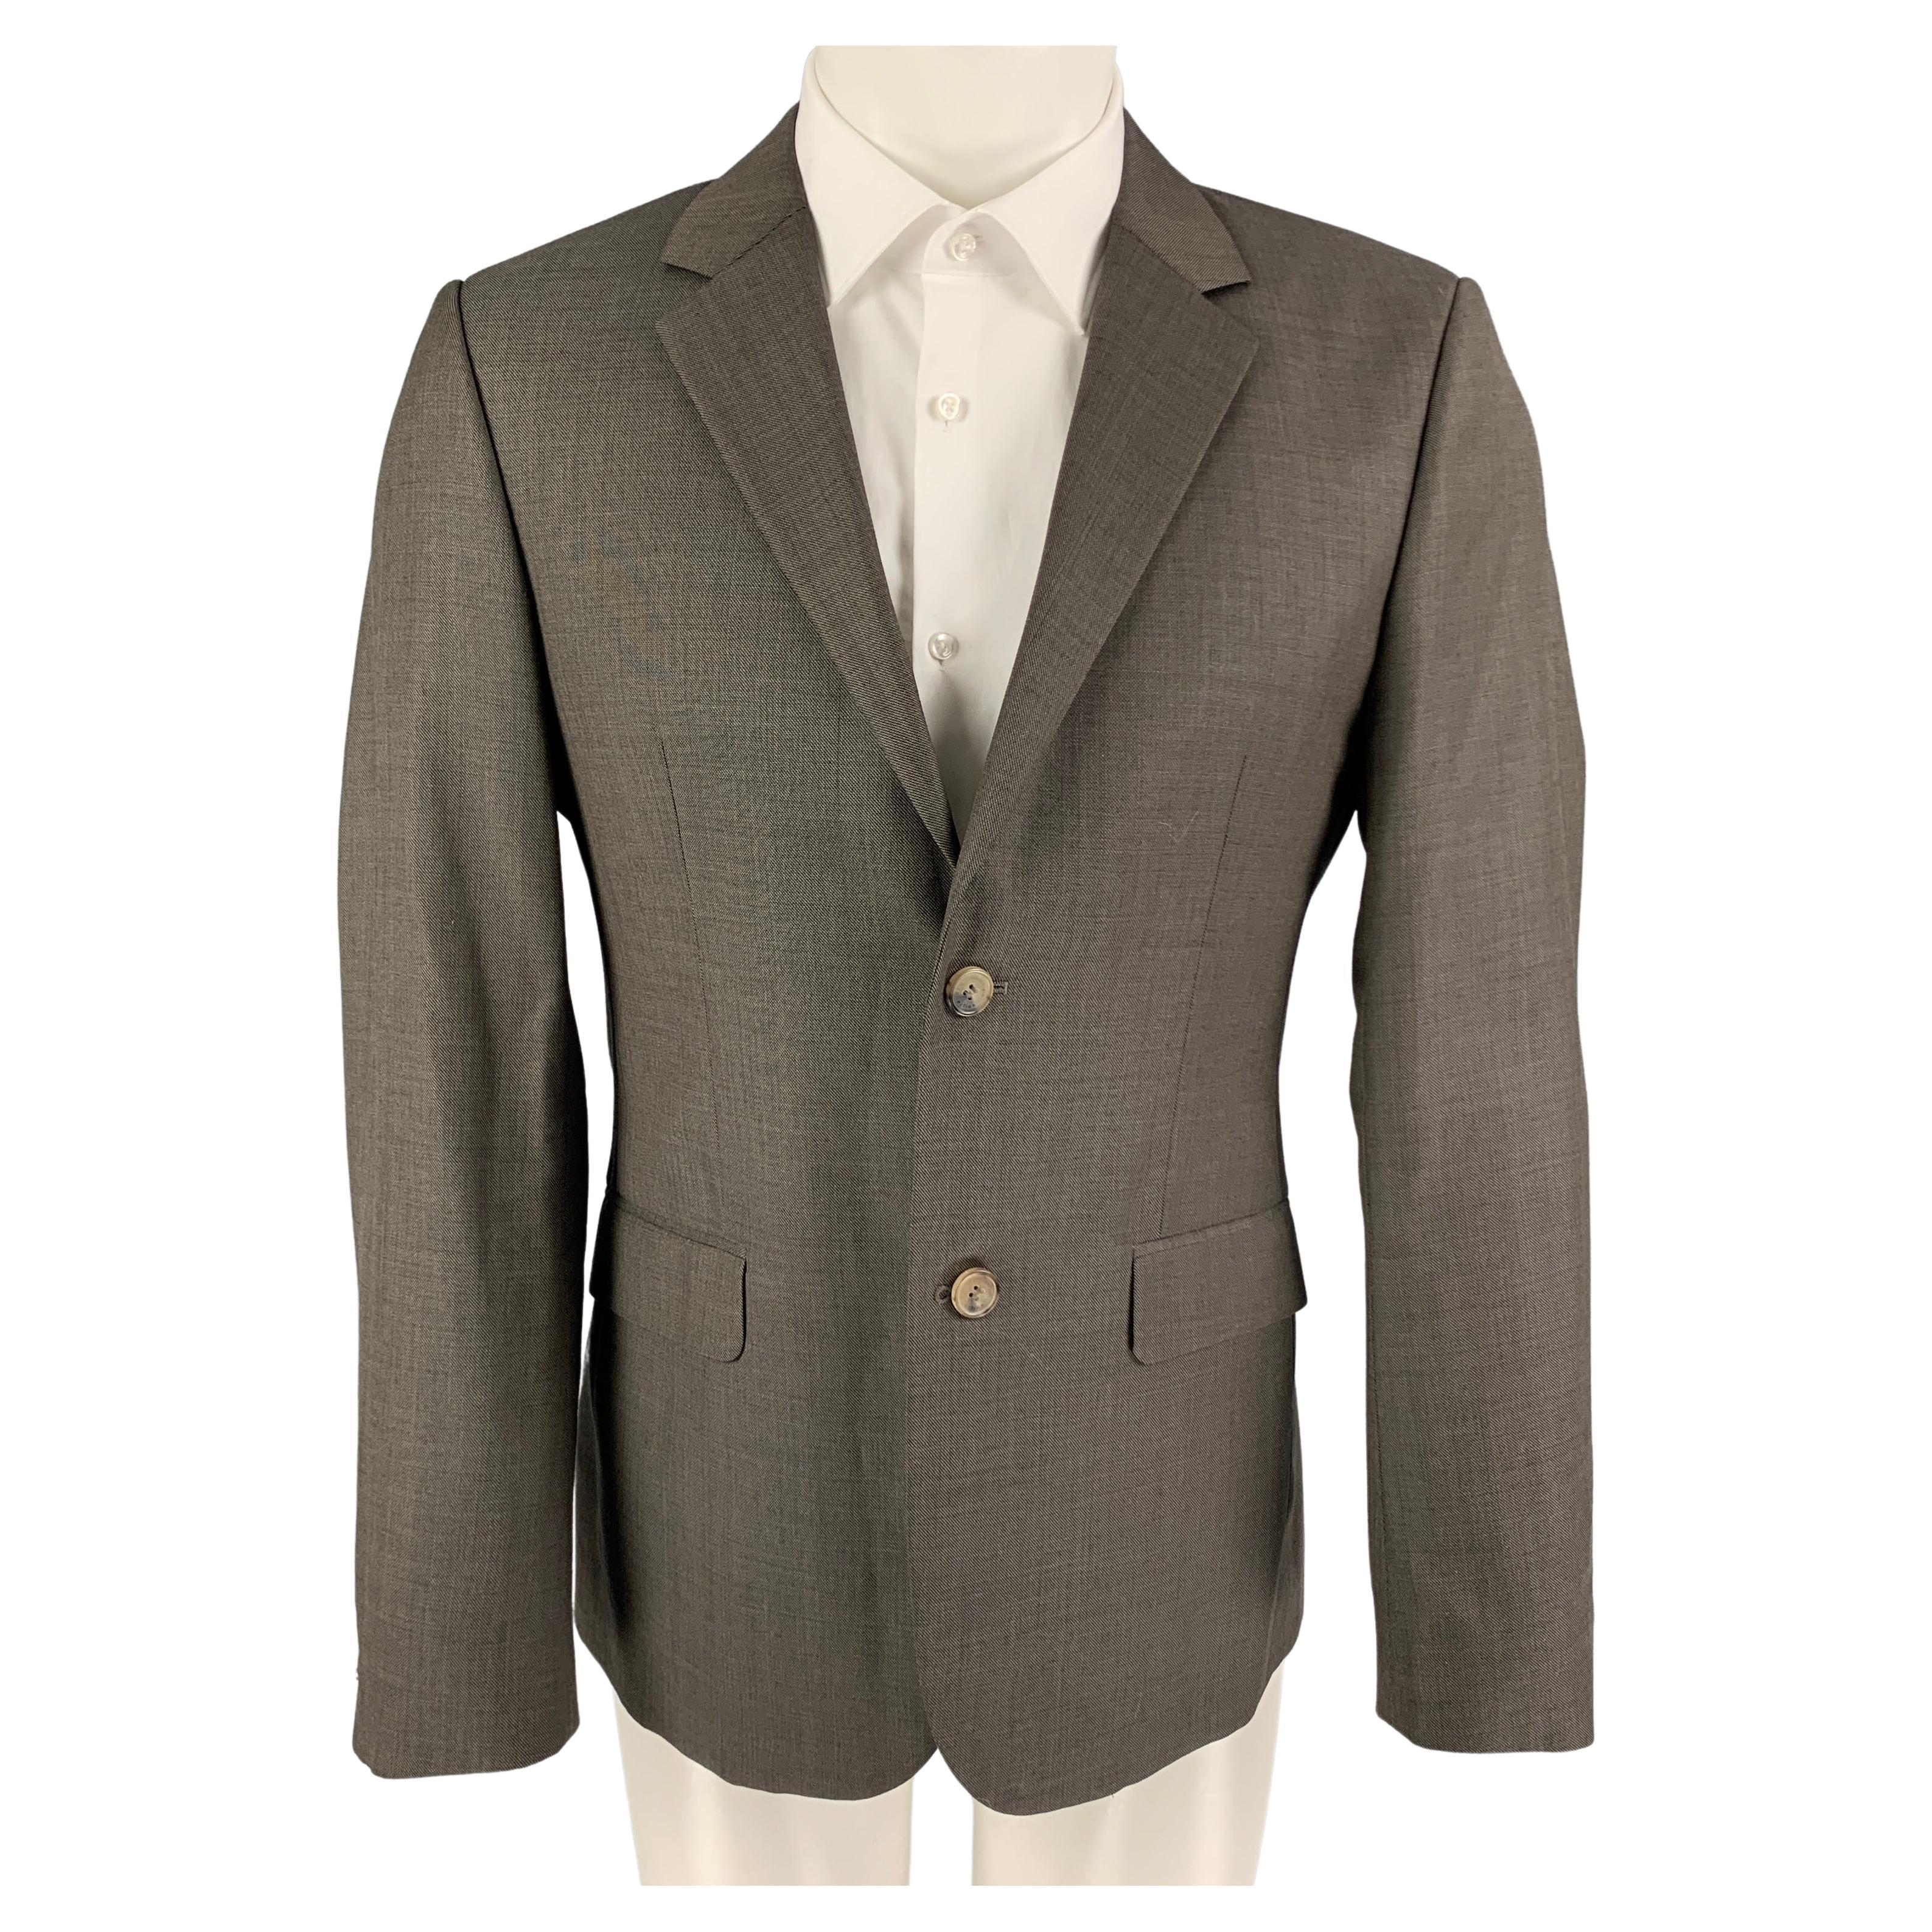 CALVIN KLEIN COLLECTION Size 36 Grey Wool Notch Lapel Sport Coat